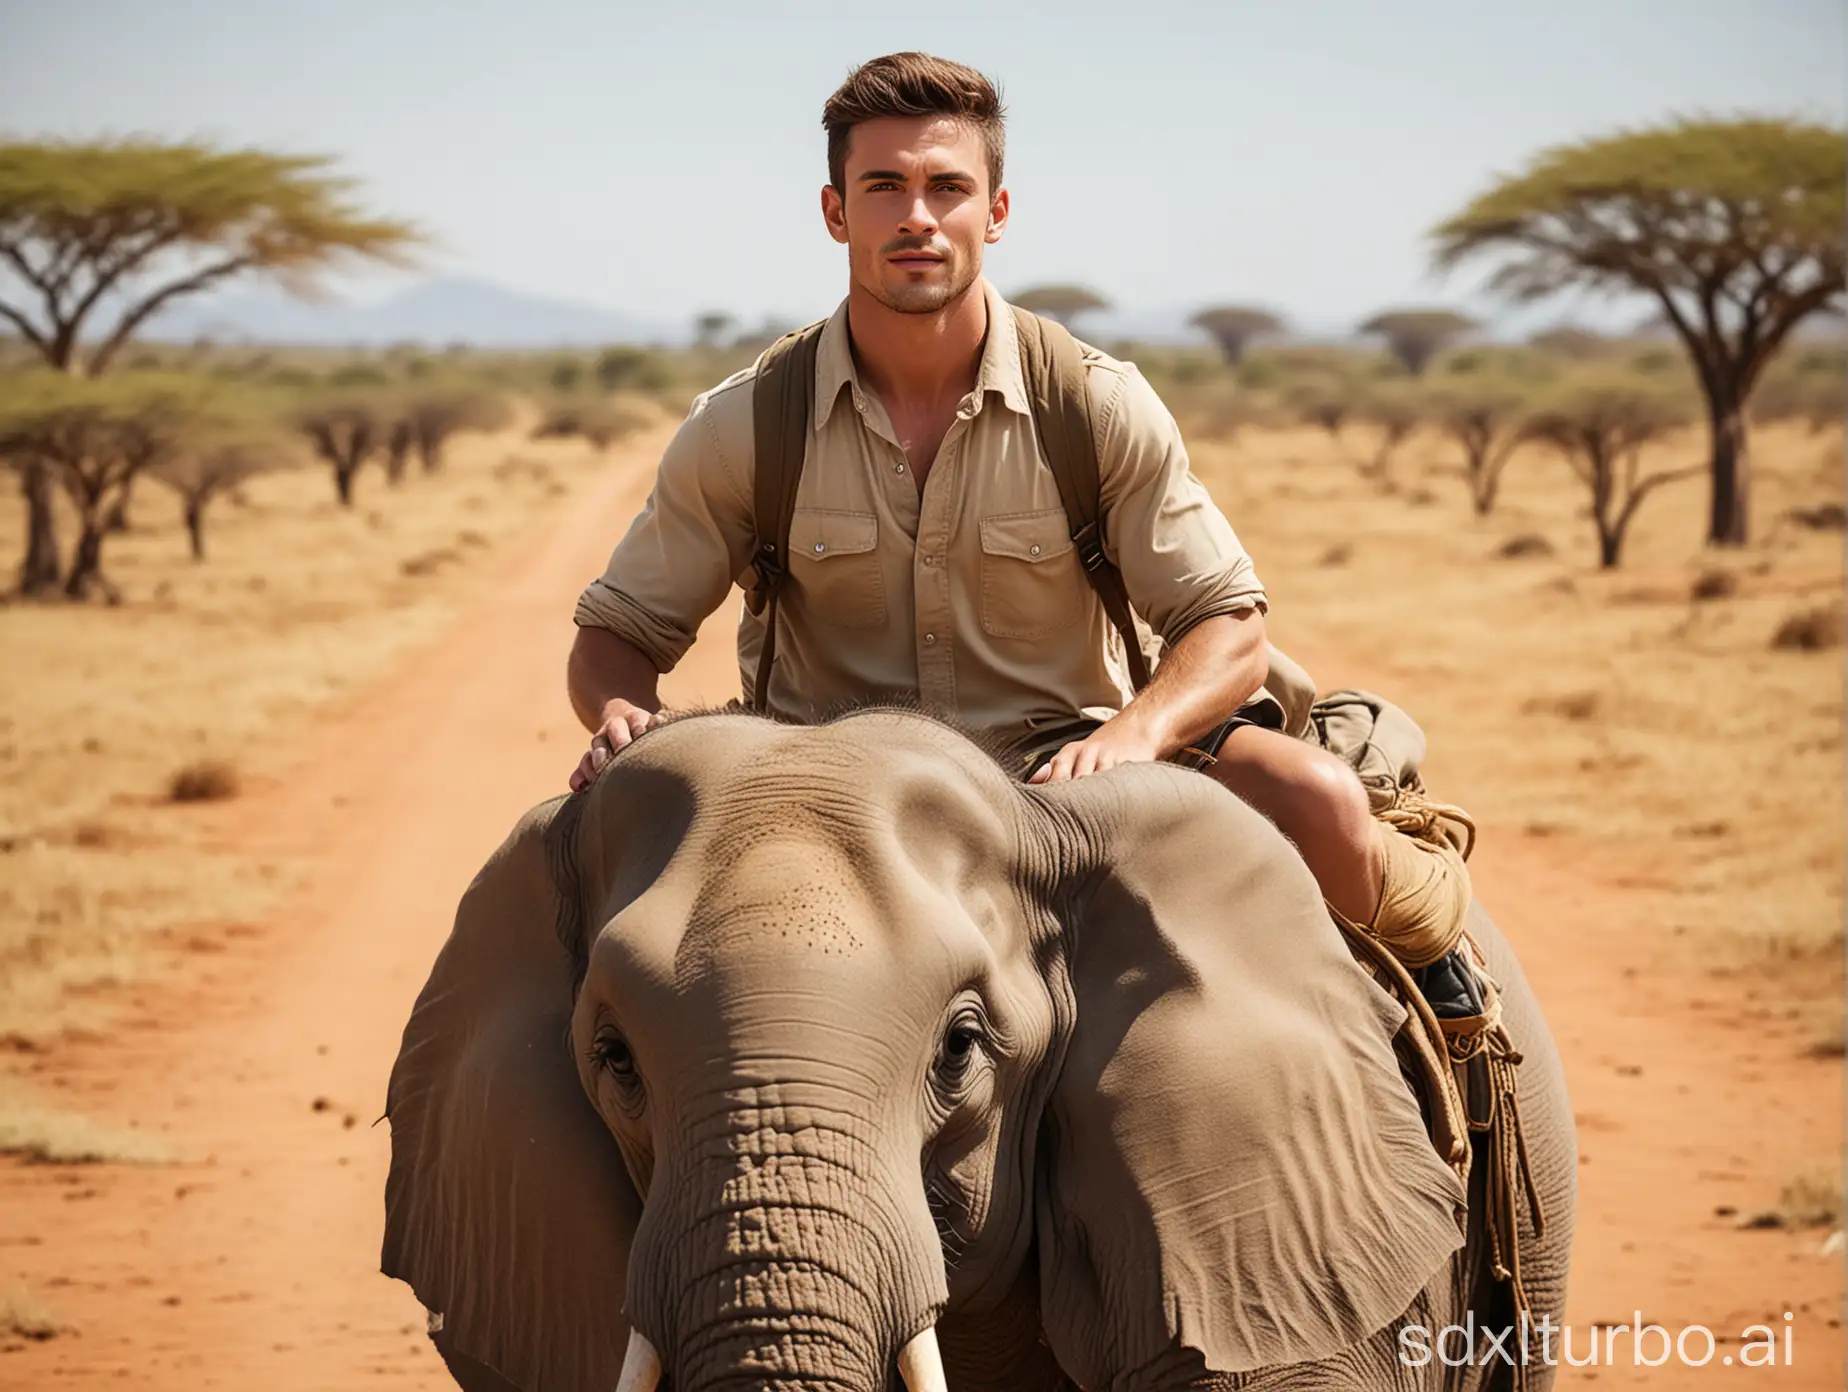 Handsome-Guy-Riding-Elephant-Across-African-Savanna